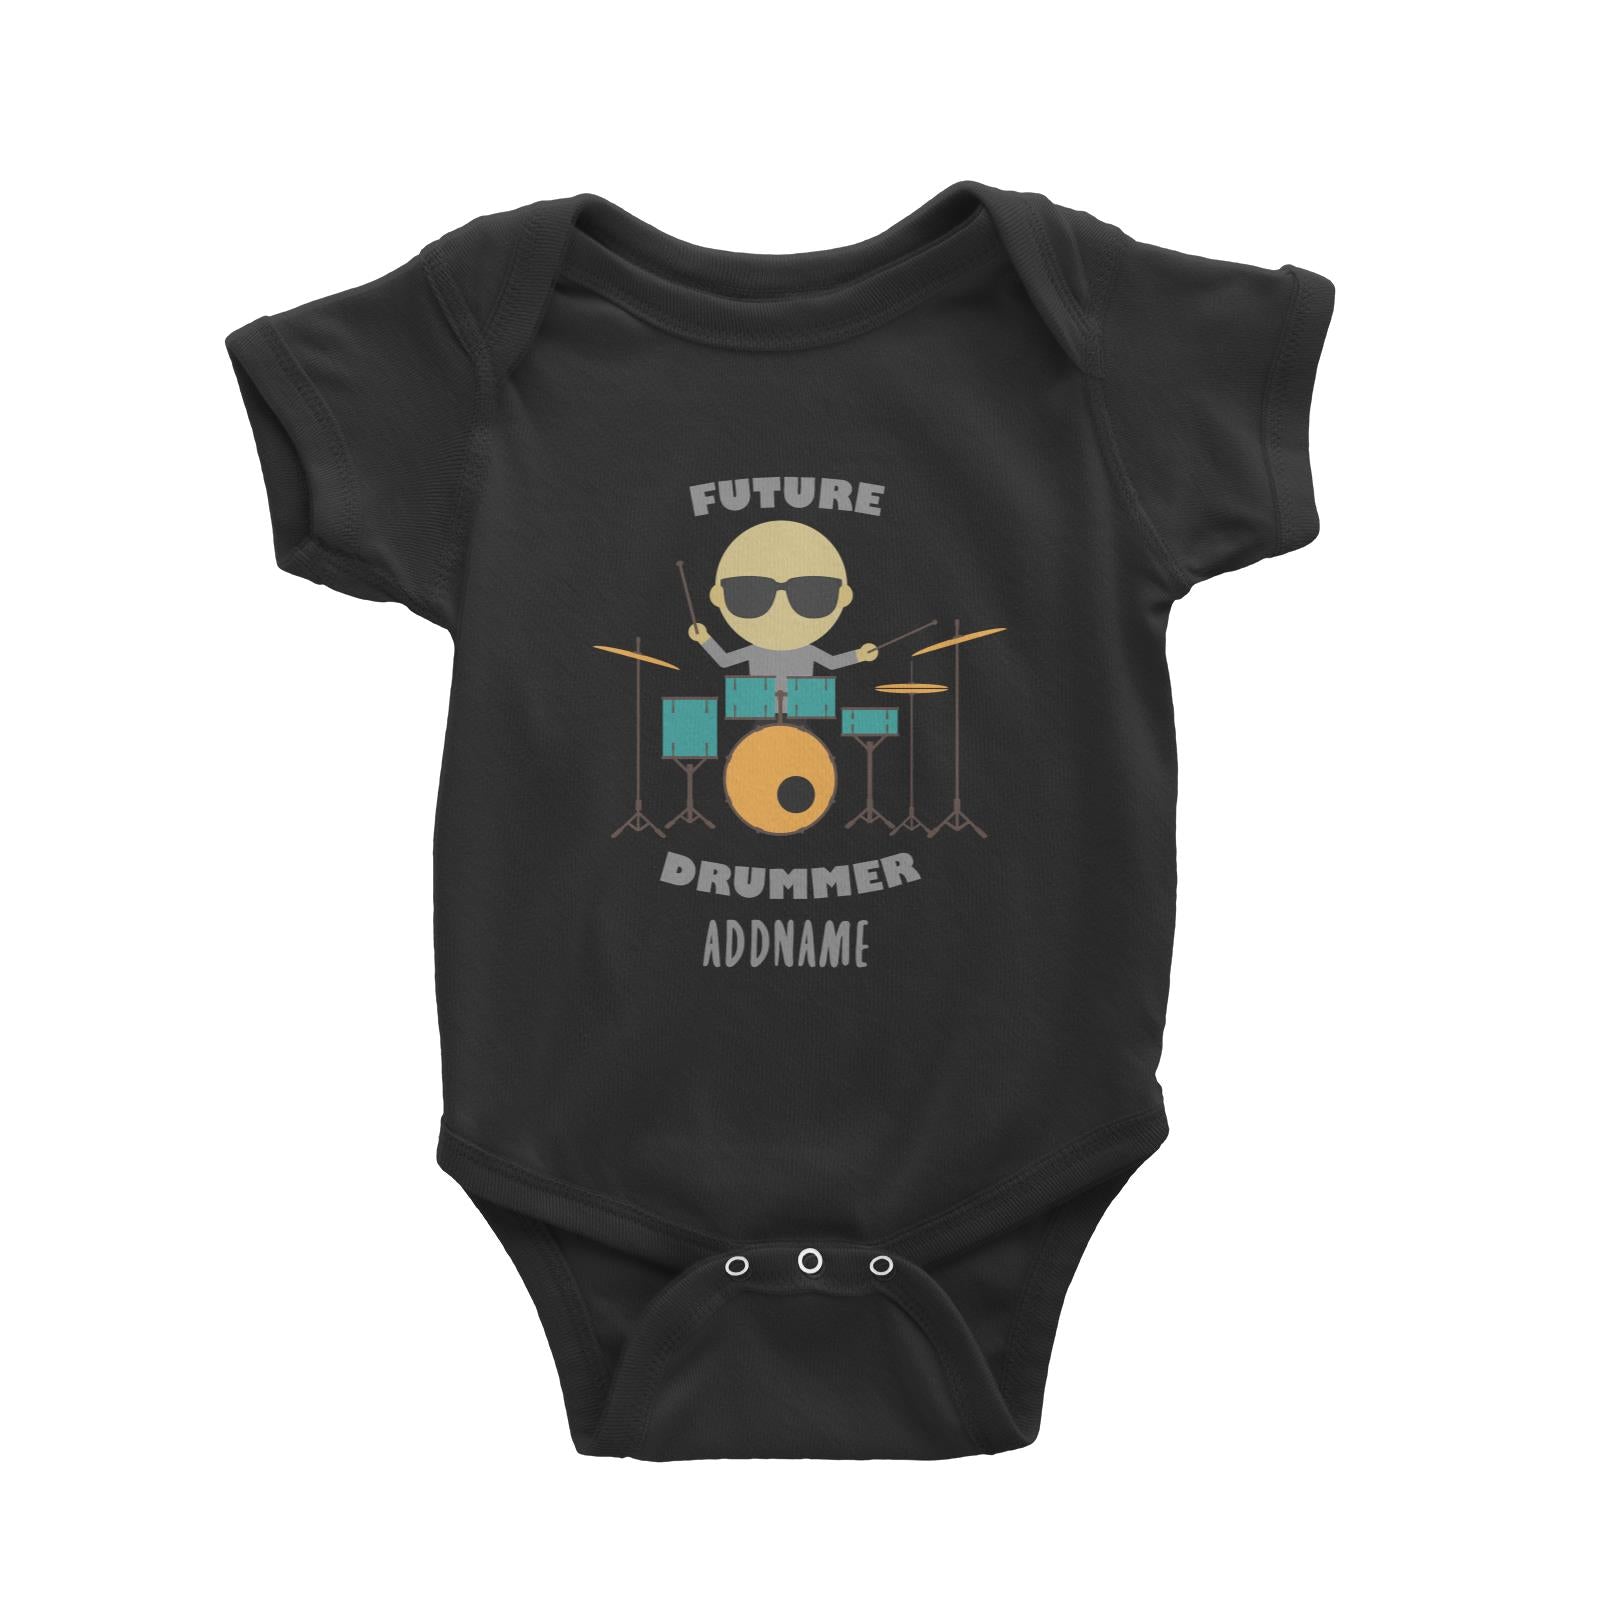 Future Drummer Addname Baby Romper Personalizable Designs Basic Newborn